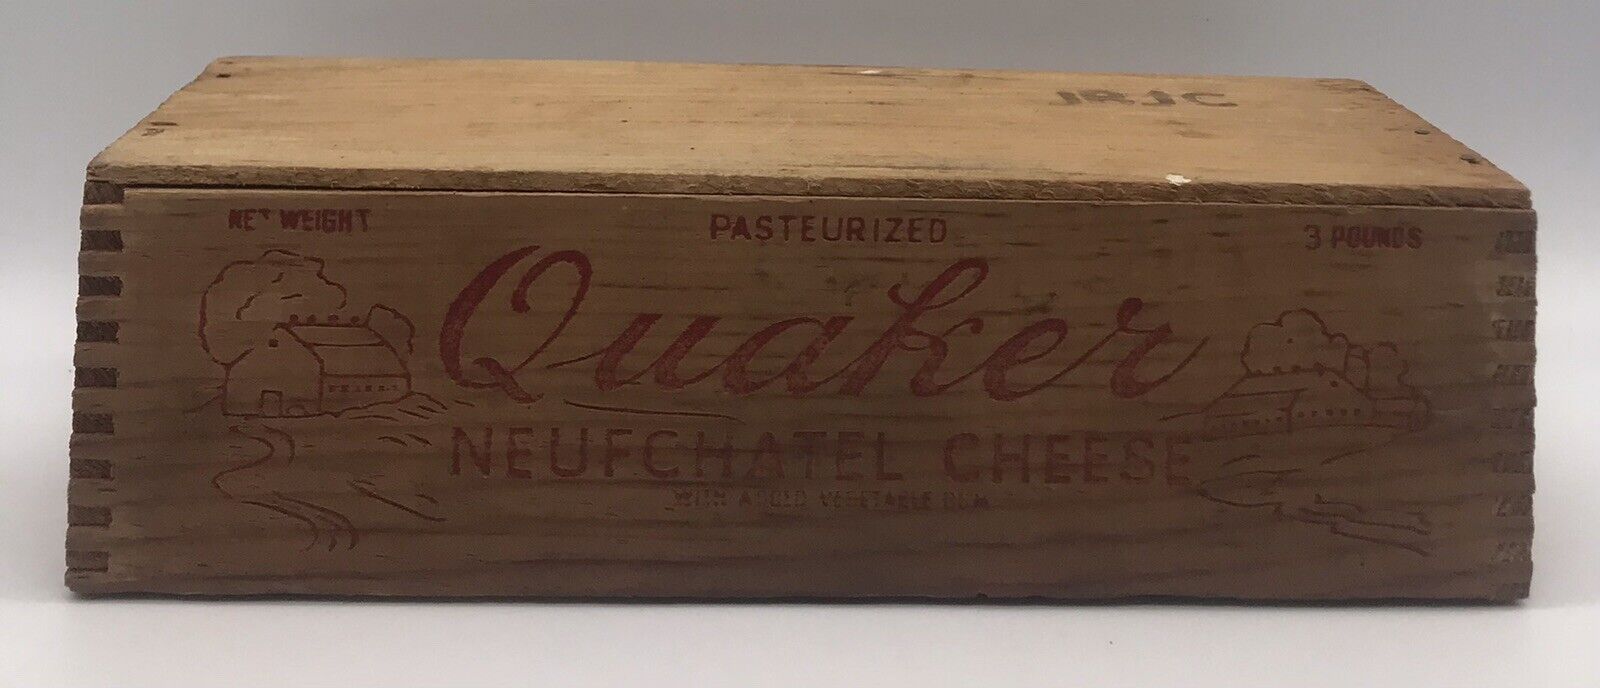 Vintage Quaker | Neufchatel Cheese Box | 3 lb | Rustic | Wooden | Empty